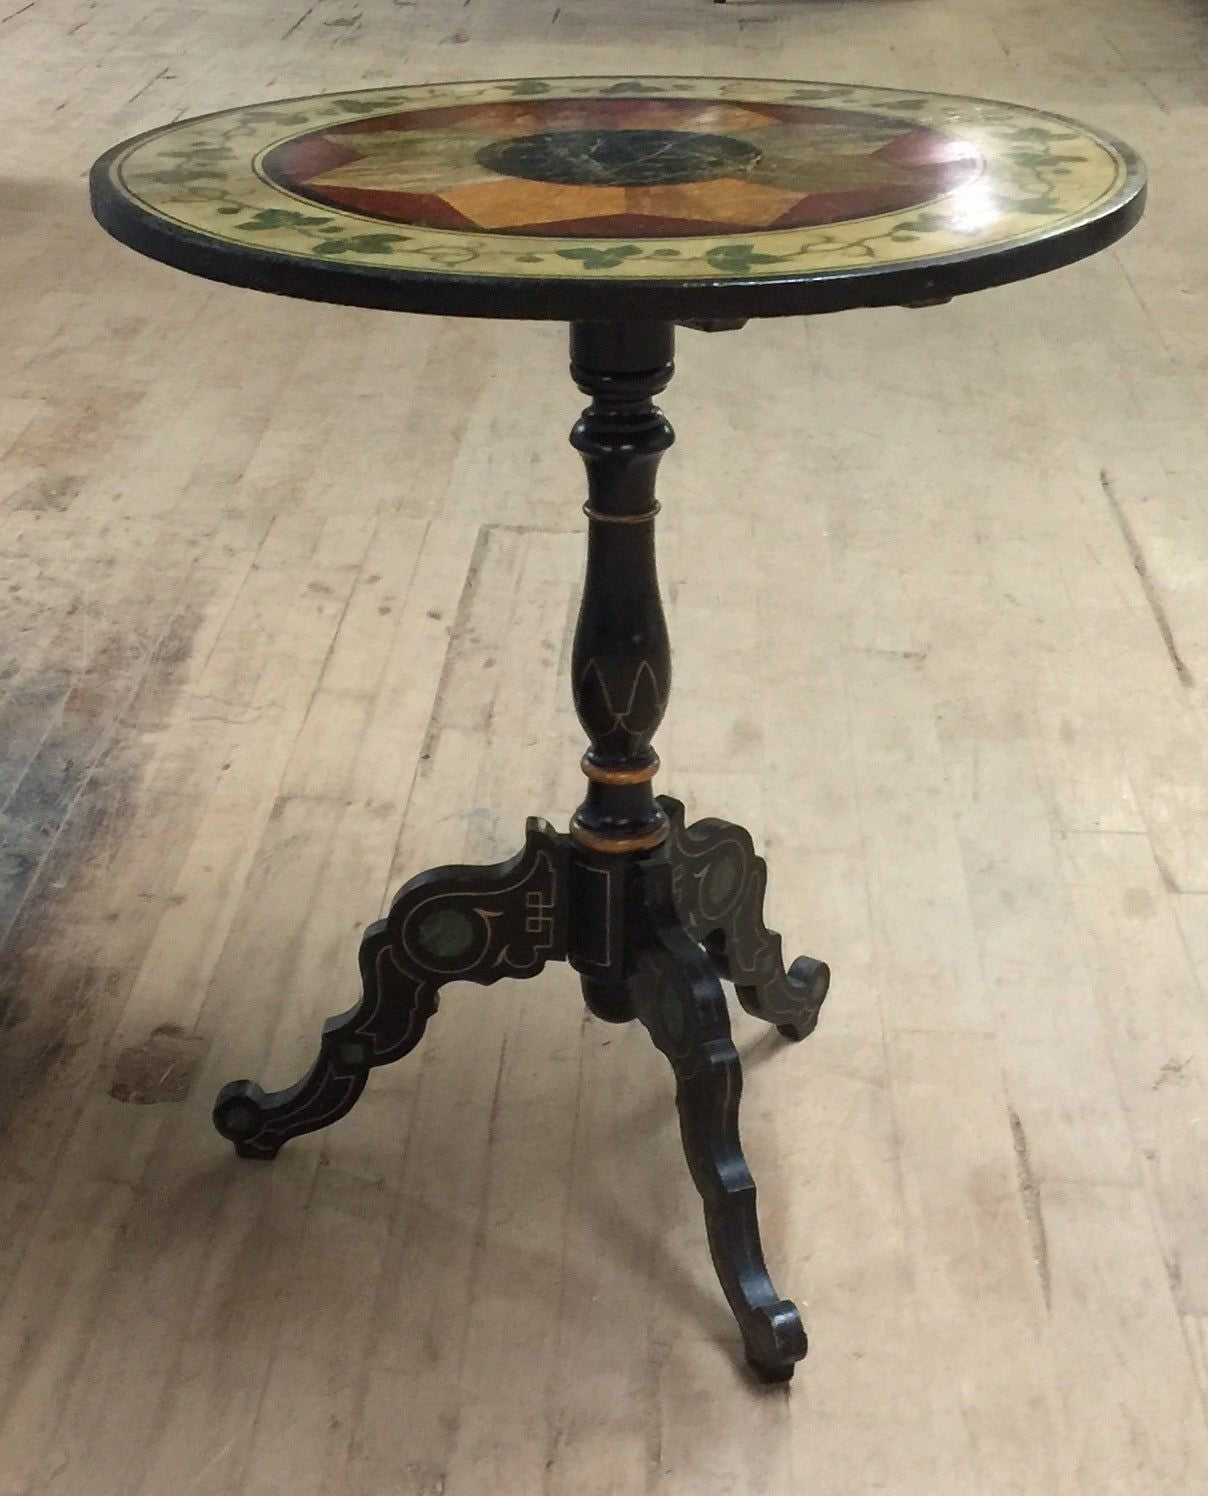 Napoleon III Painted Round Tilt-Top Table, Late 19th Century